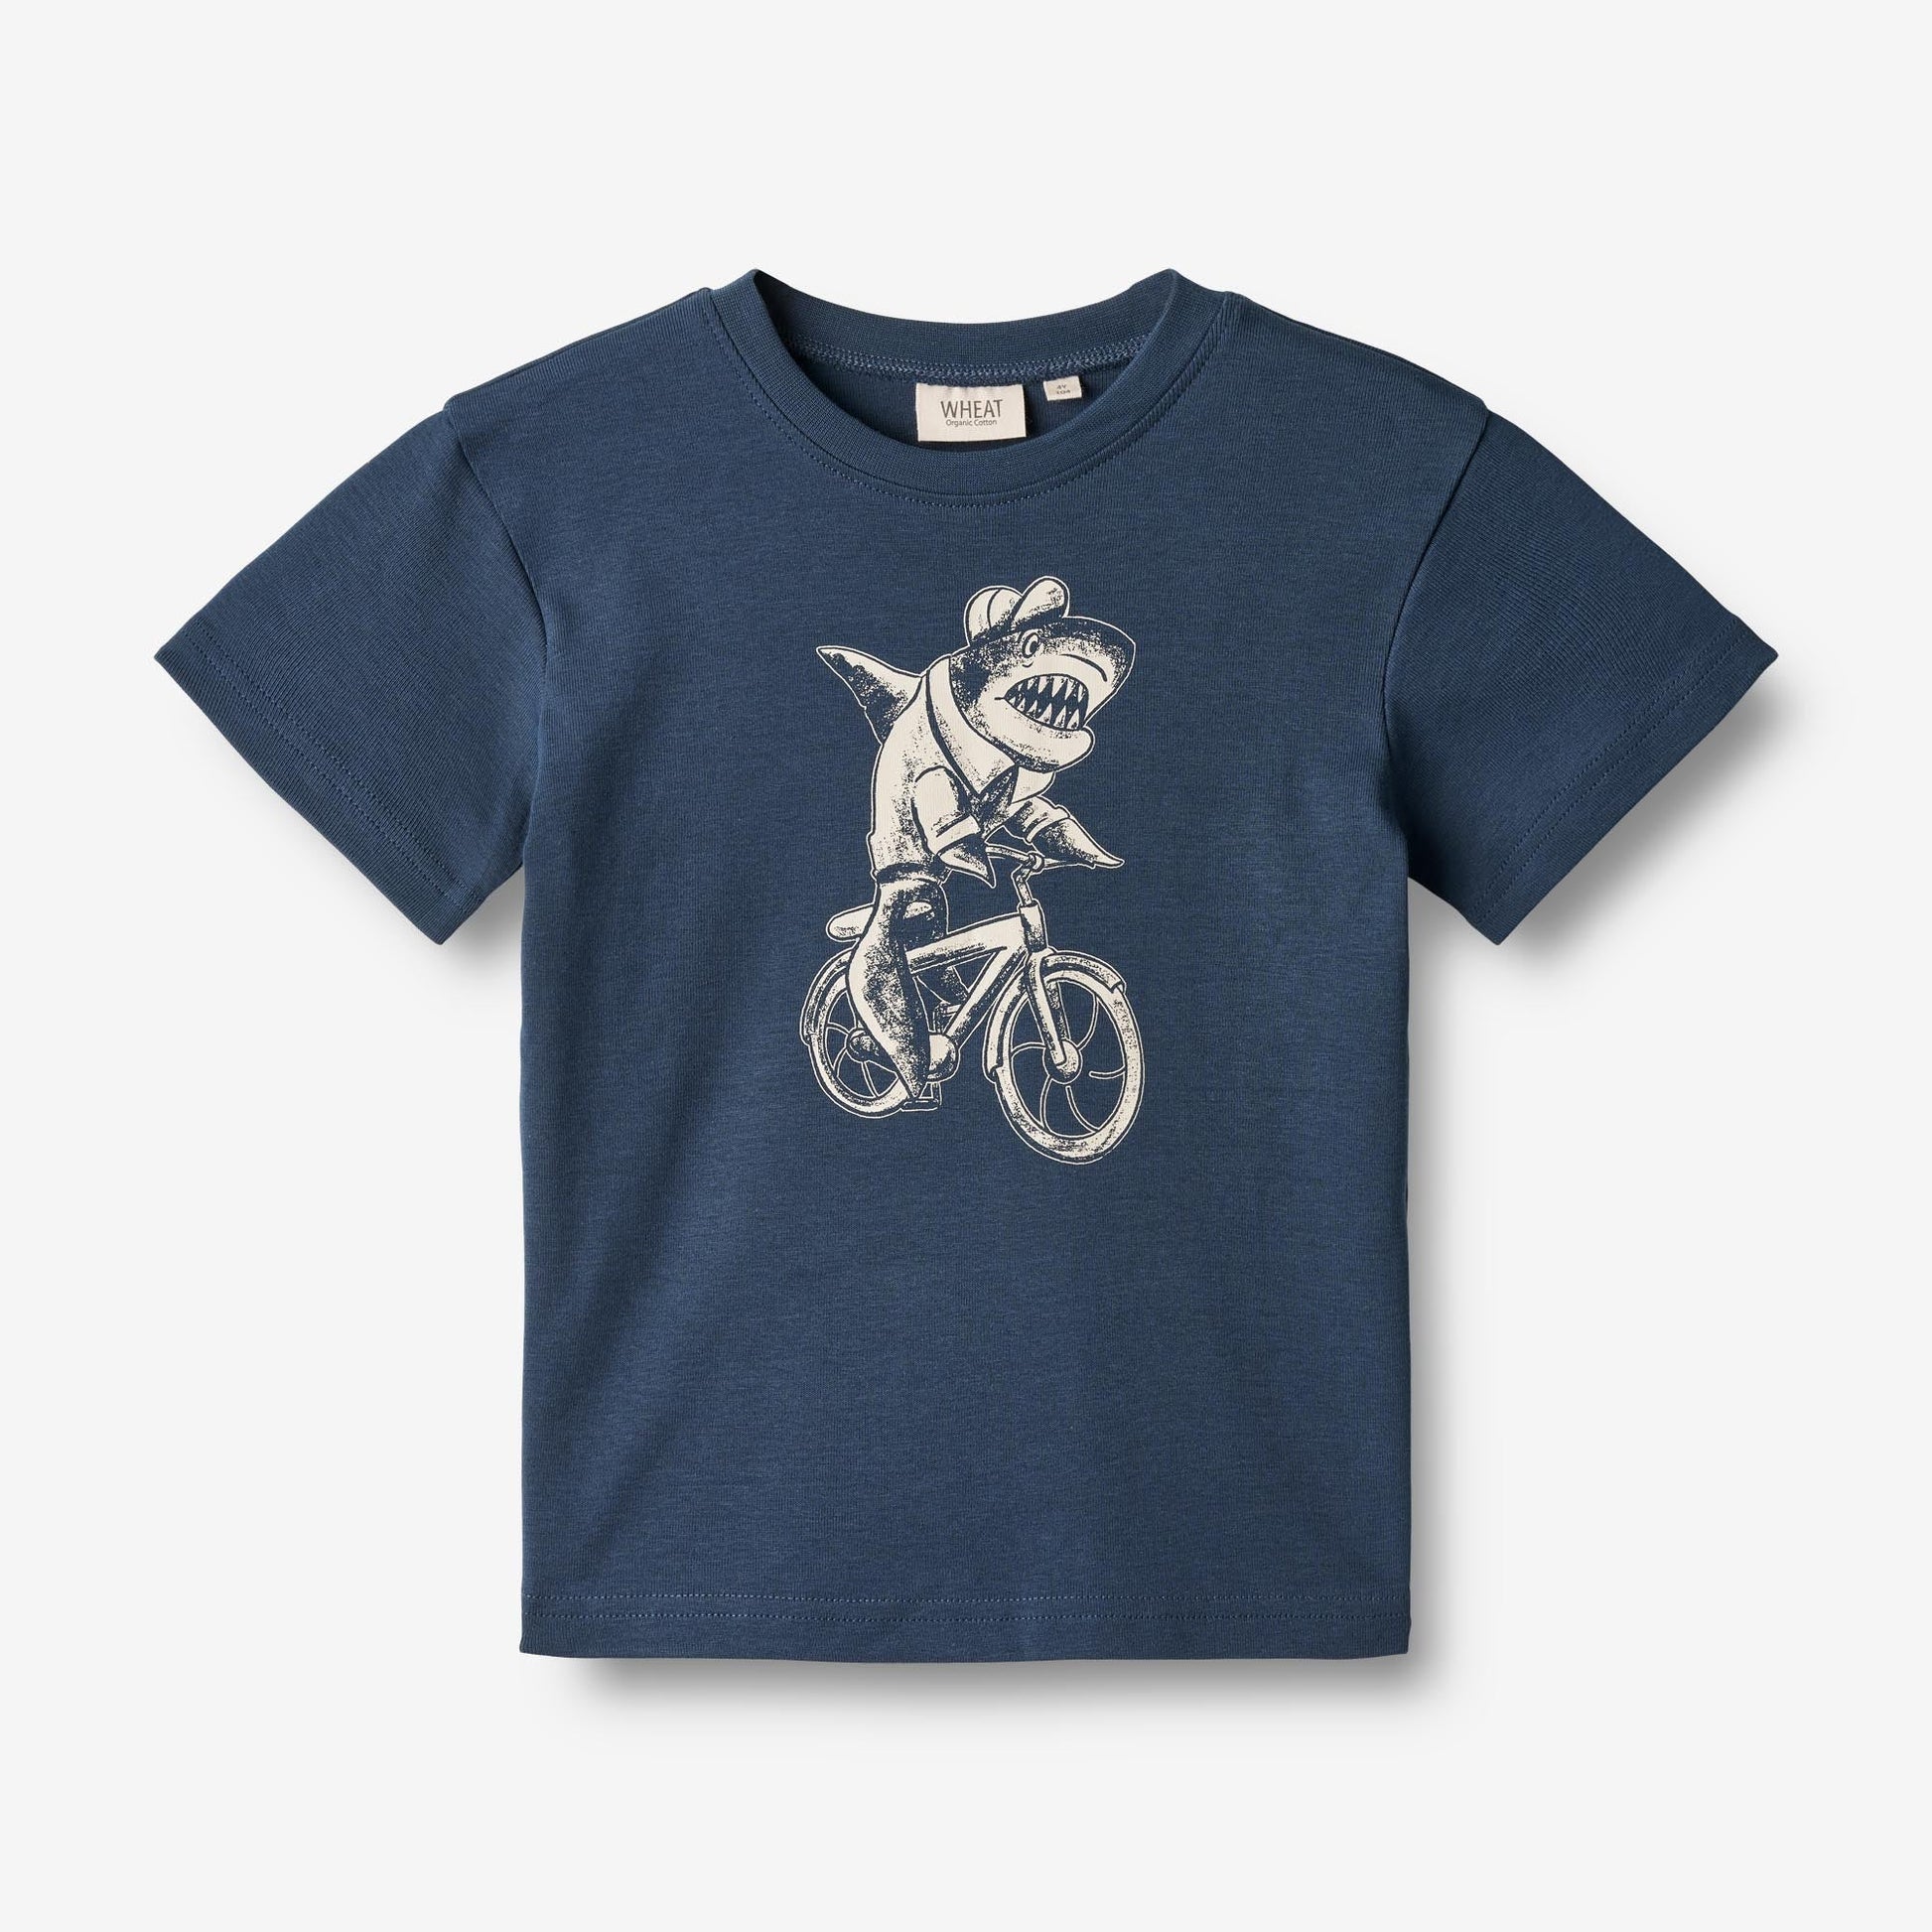 Wheat 'Kristian' Children's S/S T-Shirt - Blue Waves